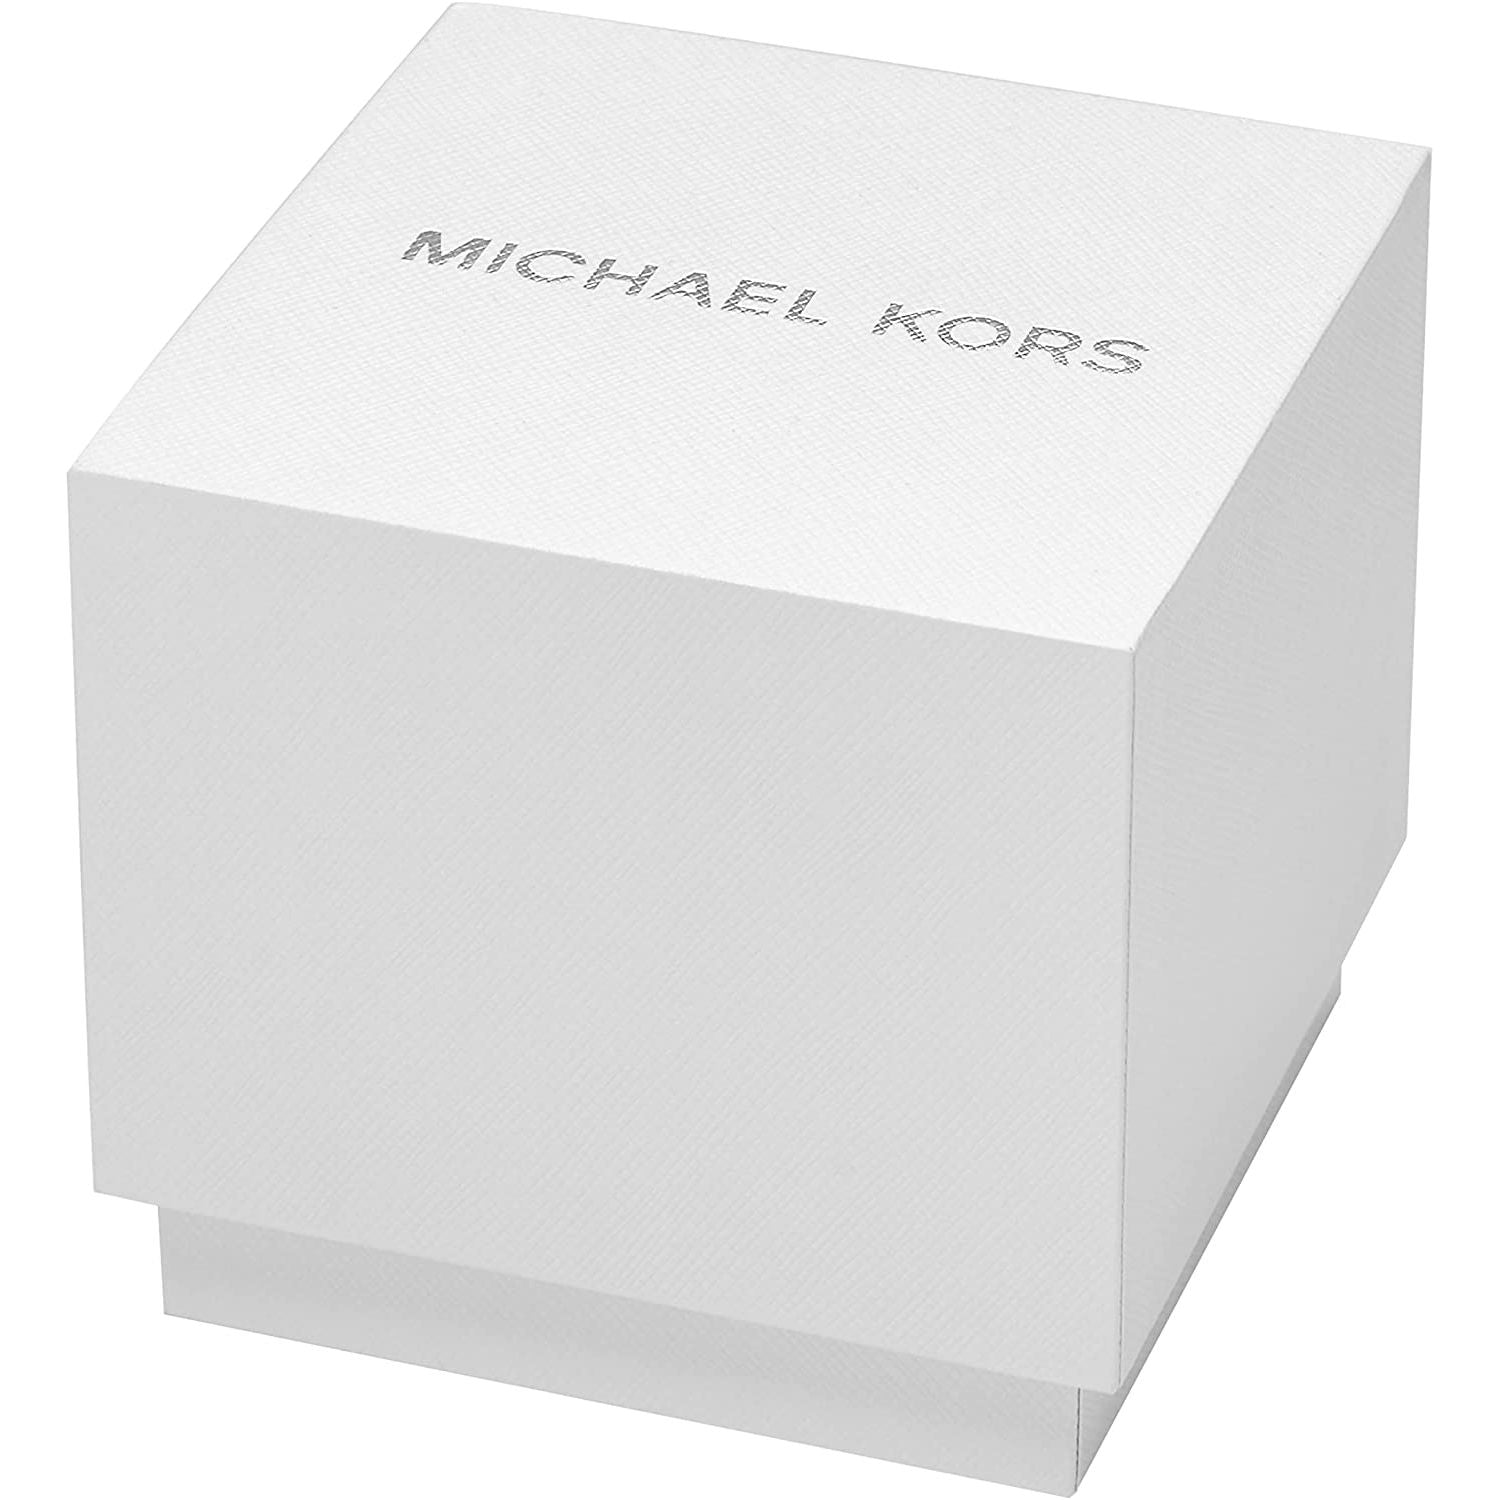 Michael Kors Women's Watch - Layton Three-Hand Rose Gold 38mm